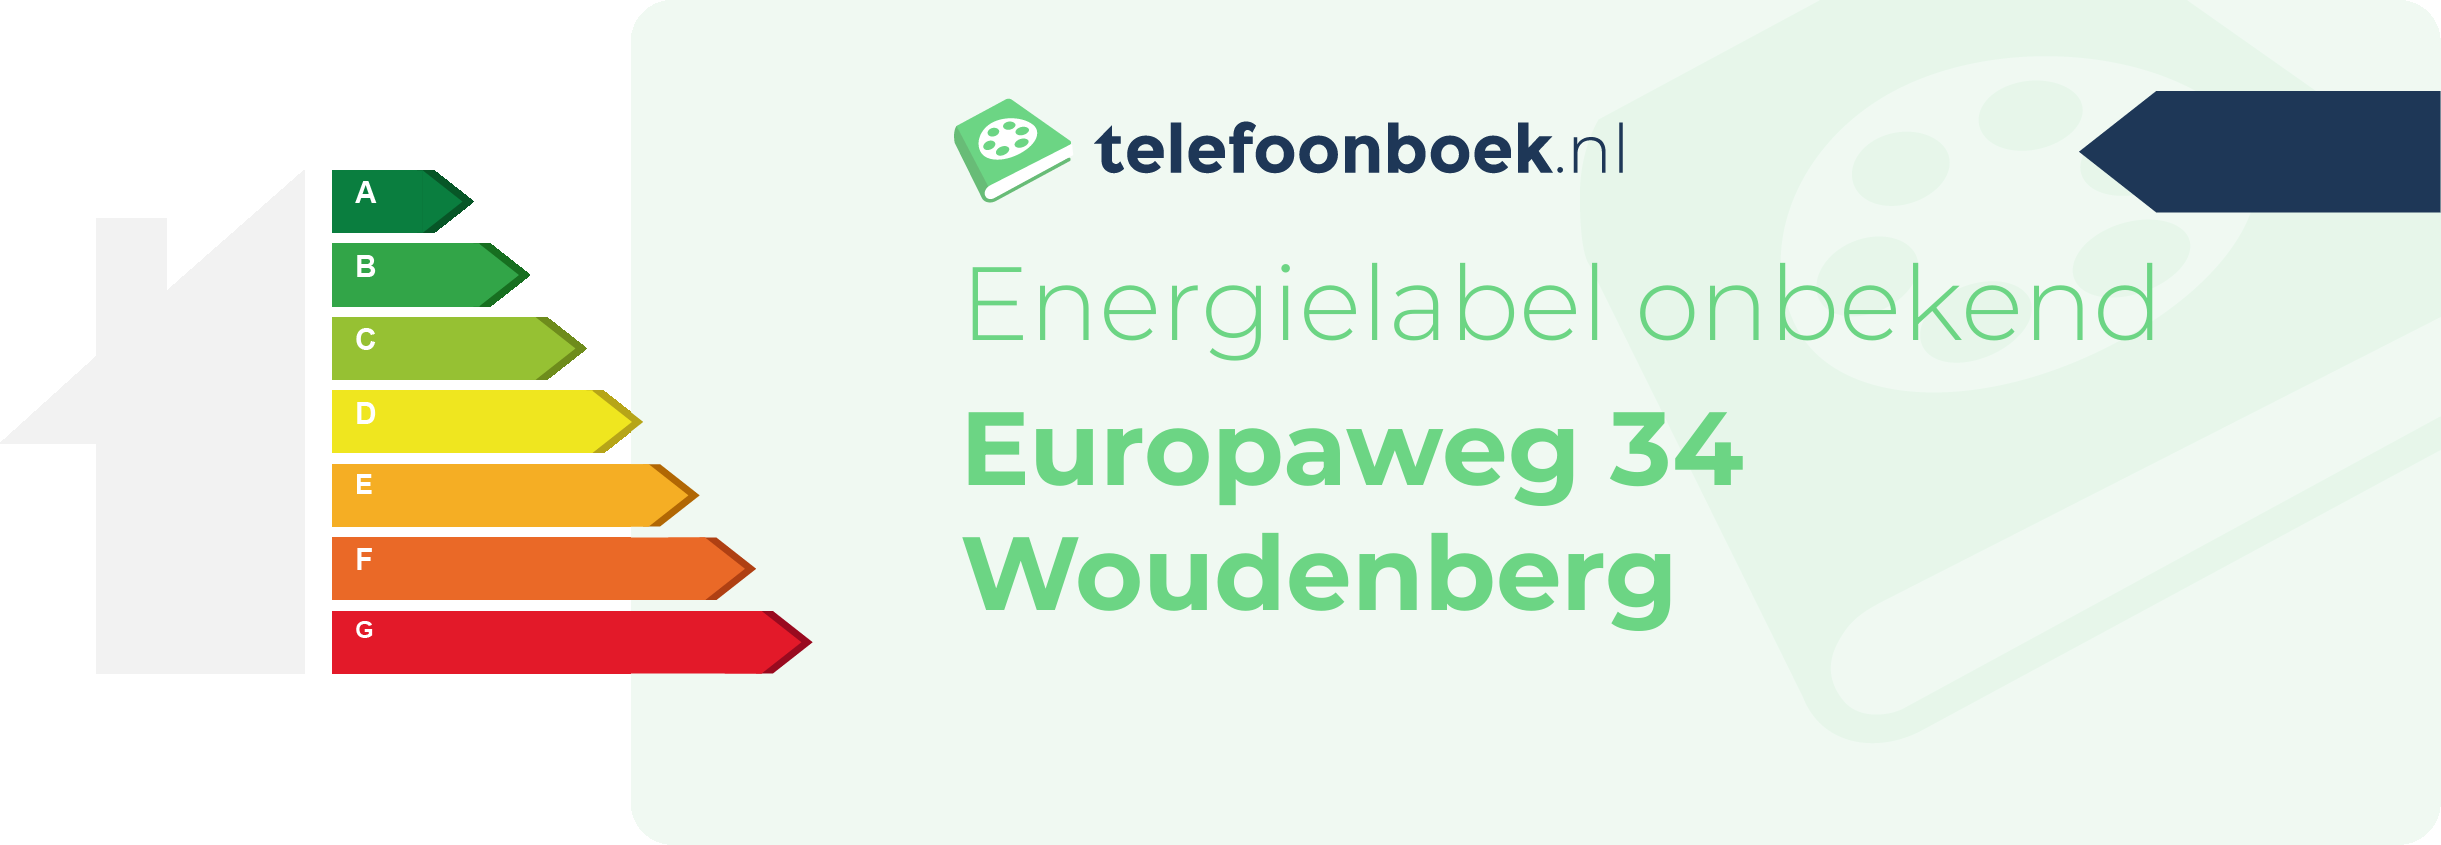 Energielabel Europaweg 34 Woudenberg